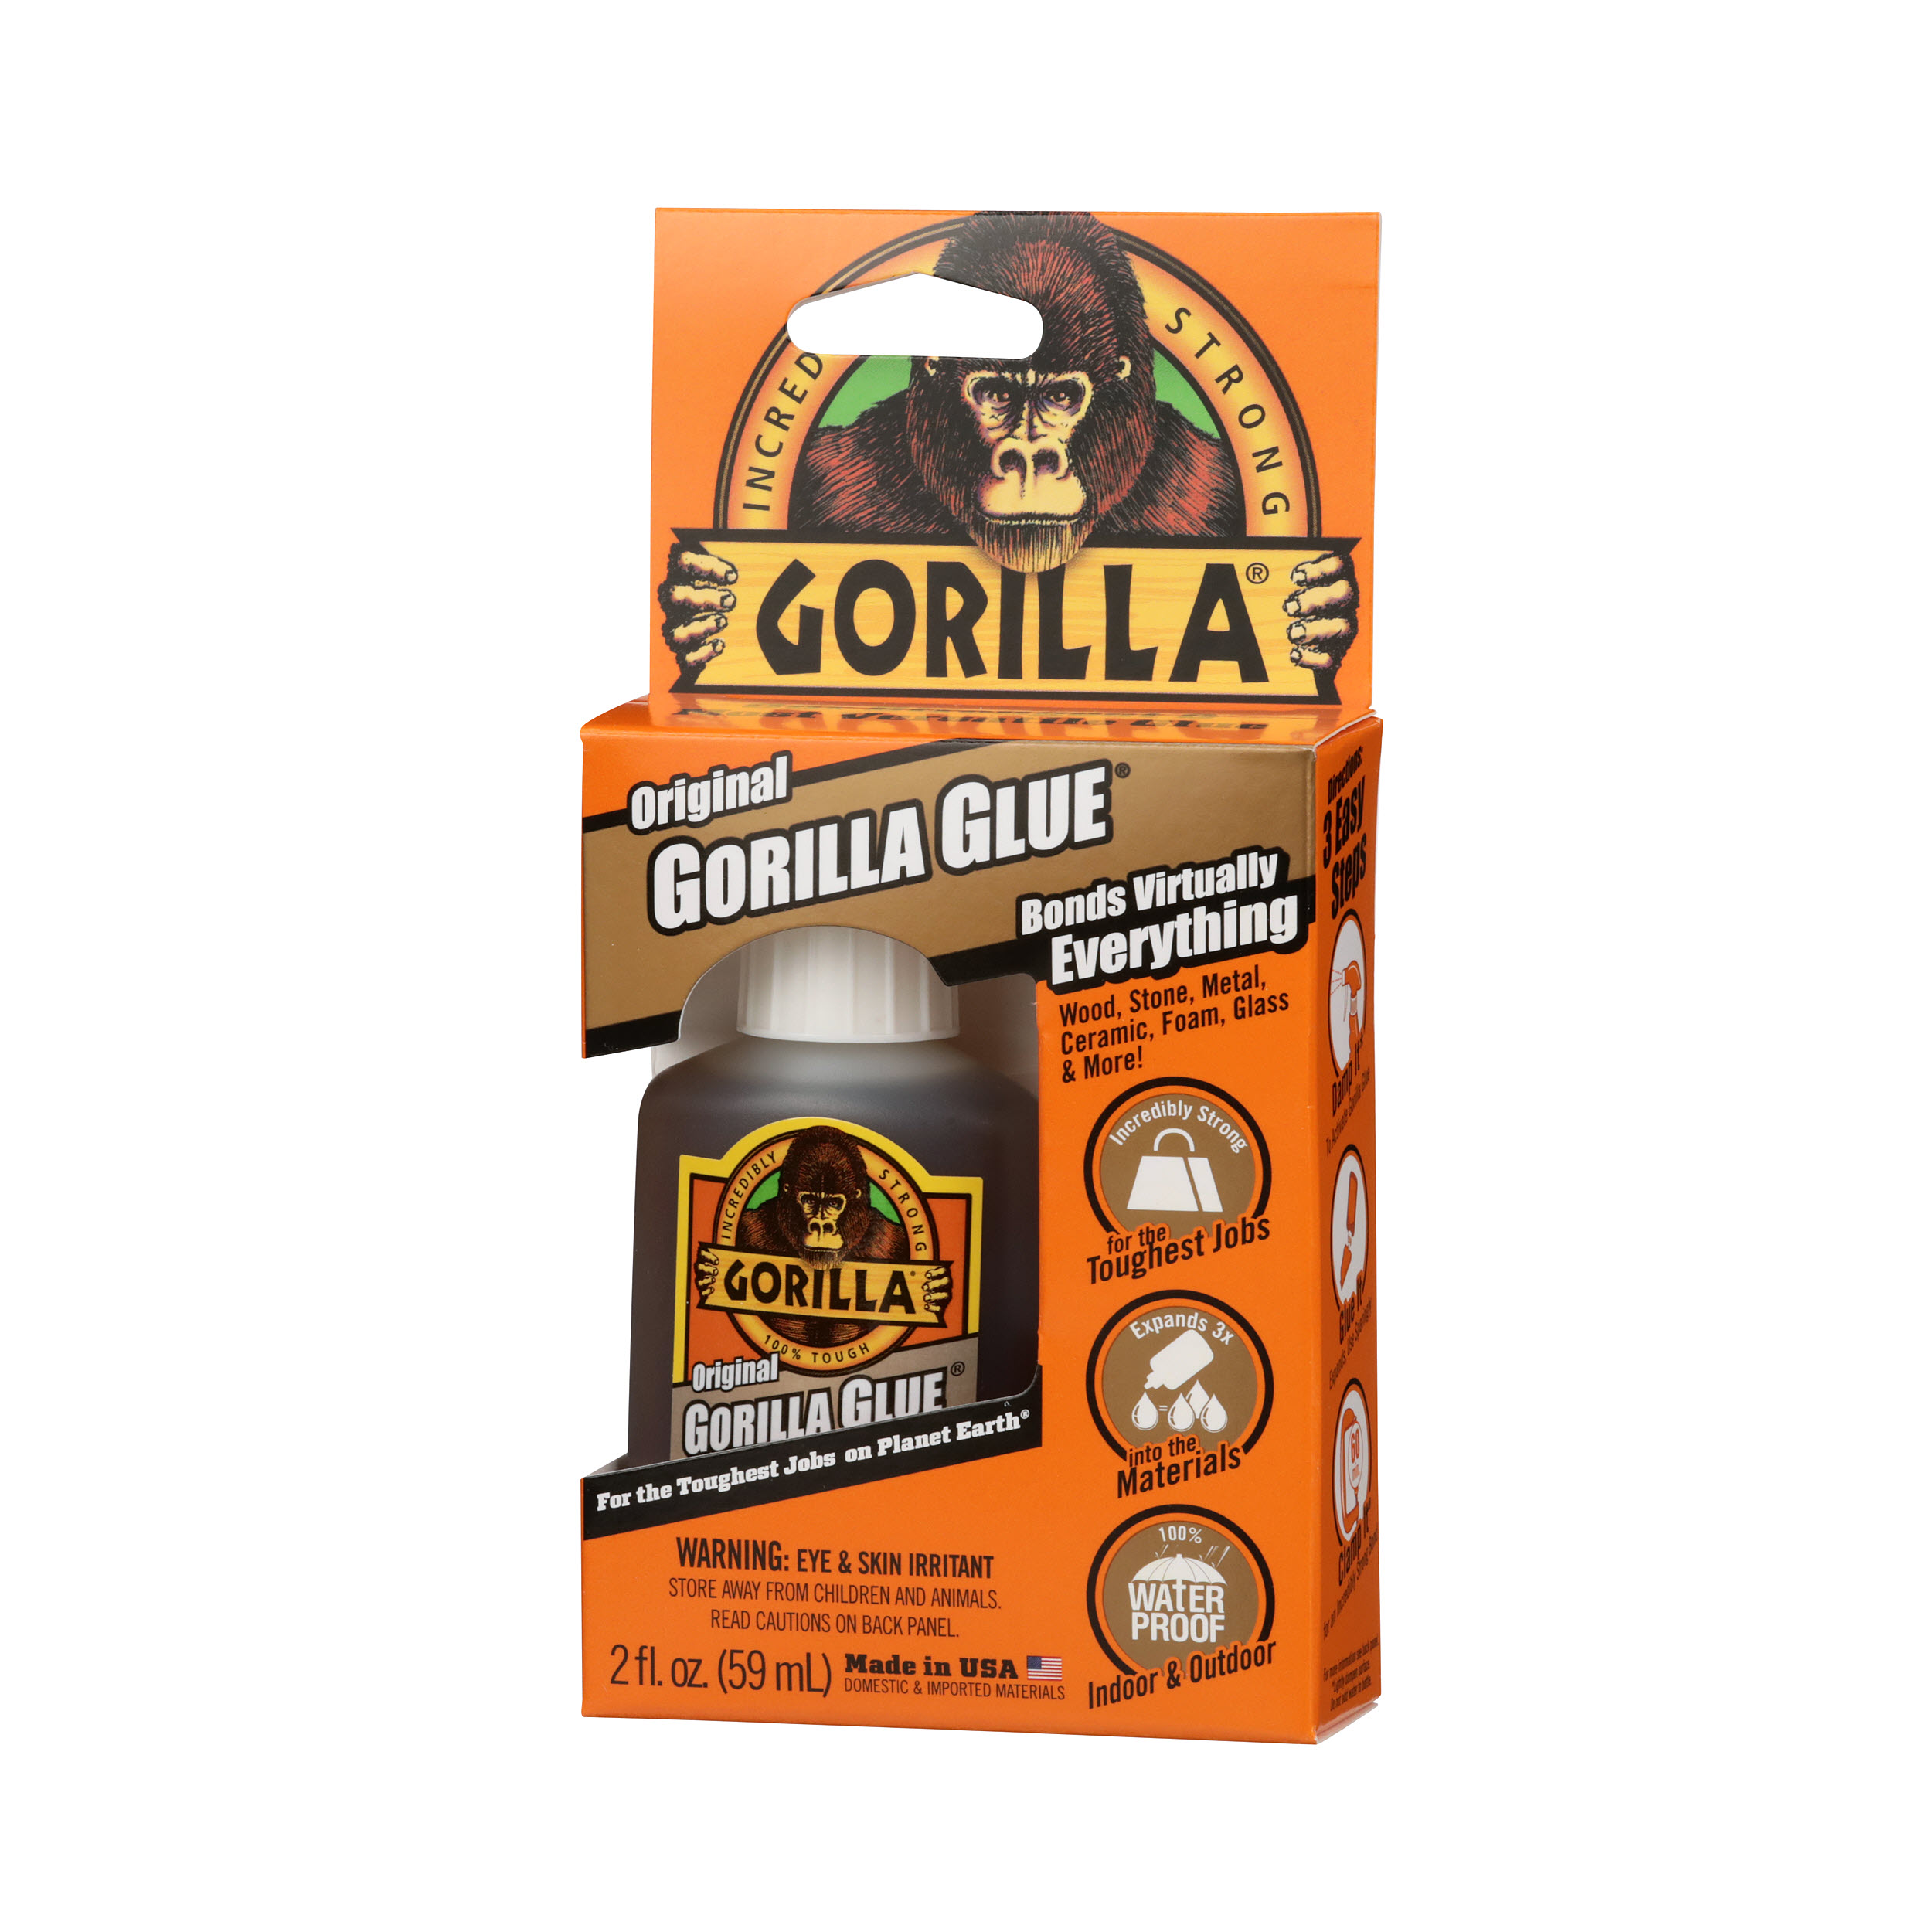 The Gorilla Glue 50002 2 oz Counter & Shelf Display, 16 Piece